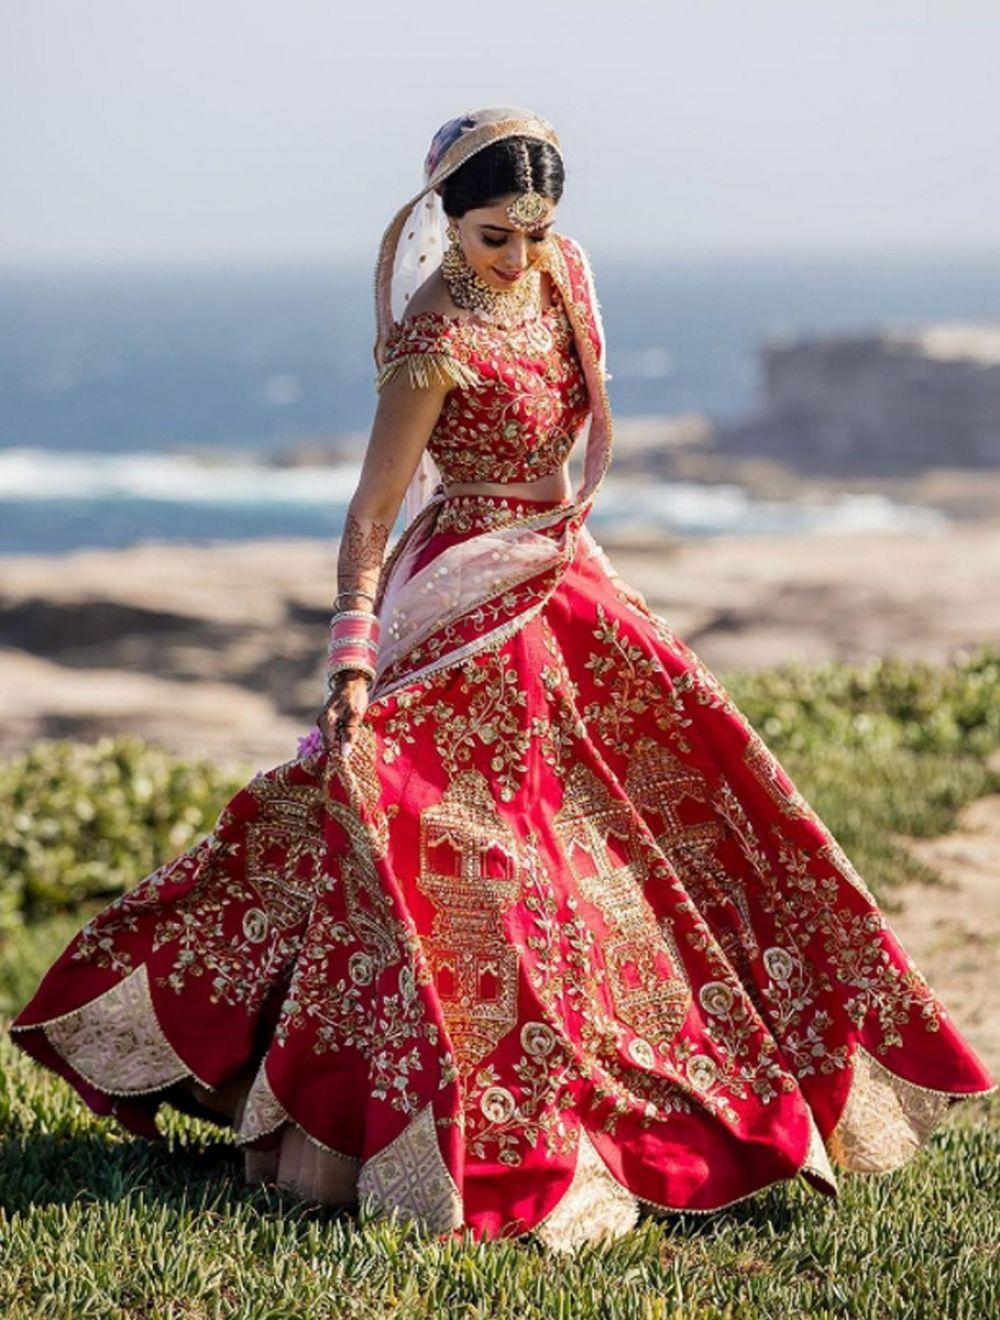 15+ WoW Elements that complete Rajasthani bridal look - SetMyWed